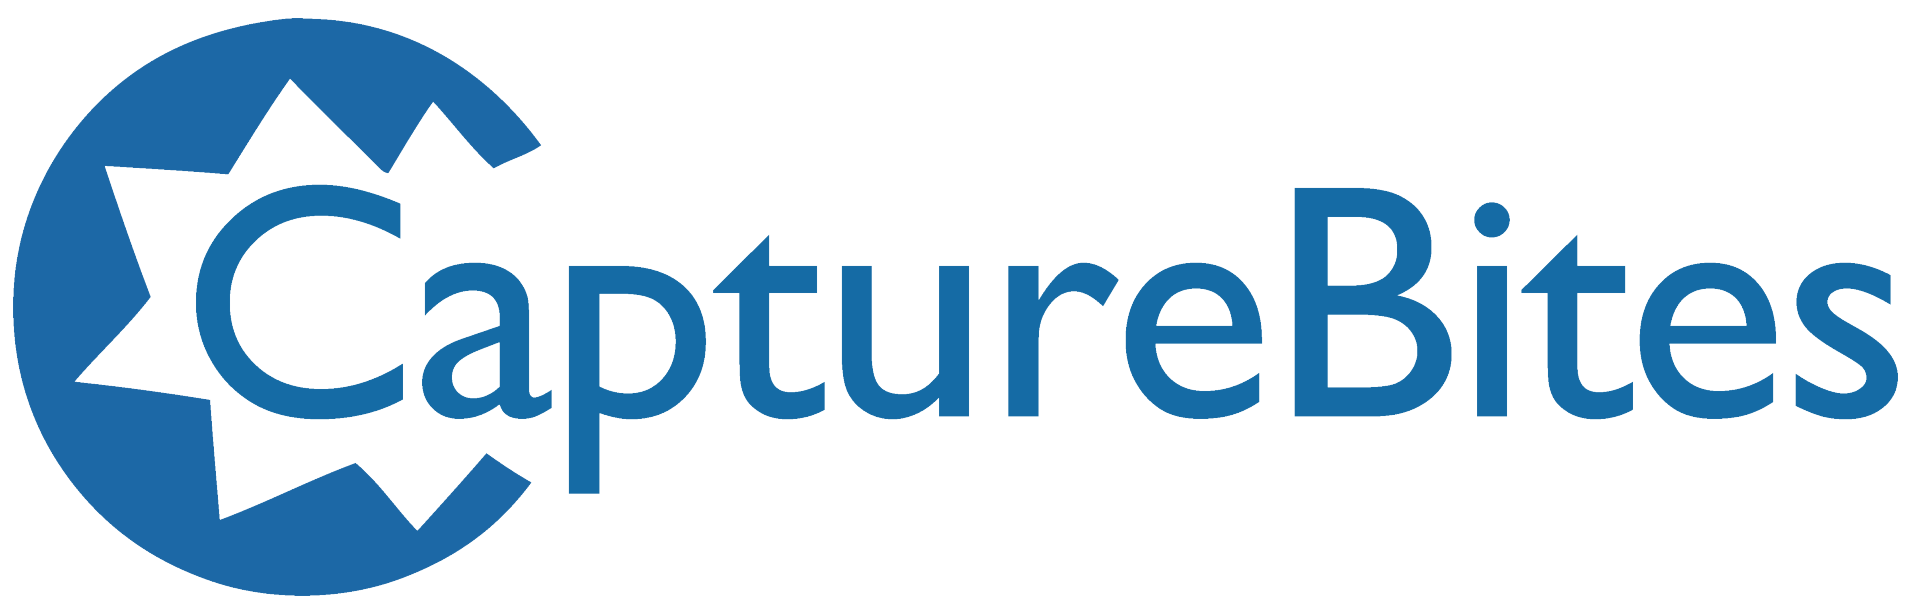 CaptureBites Logo